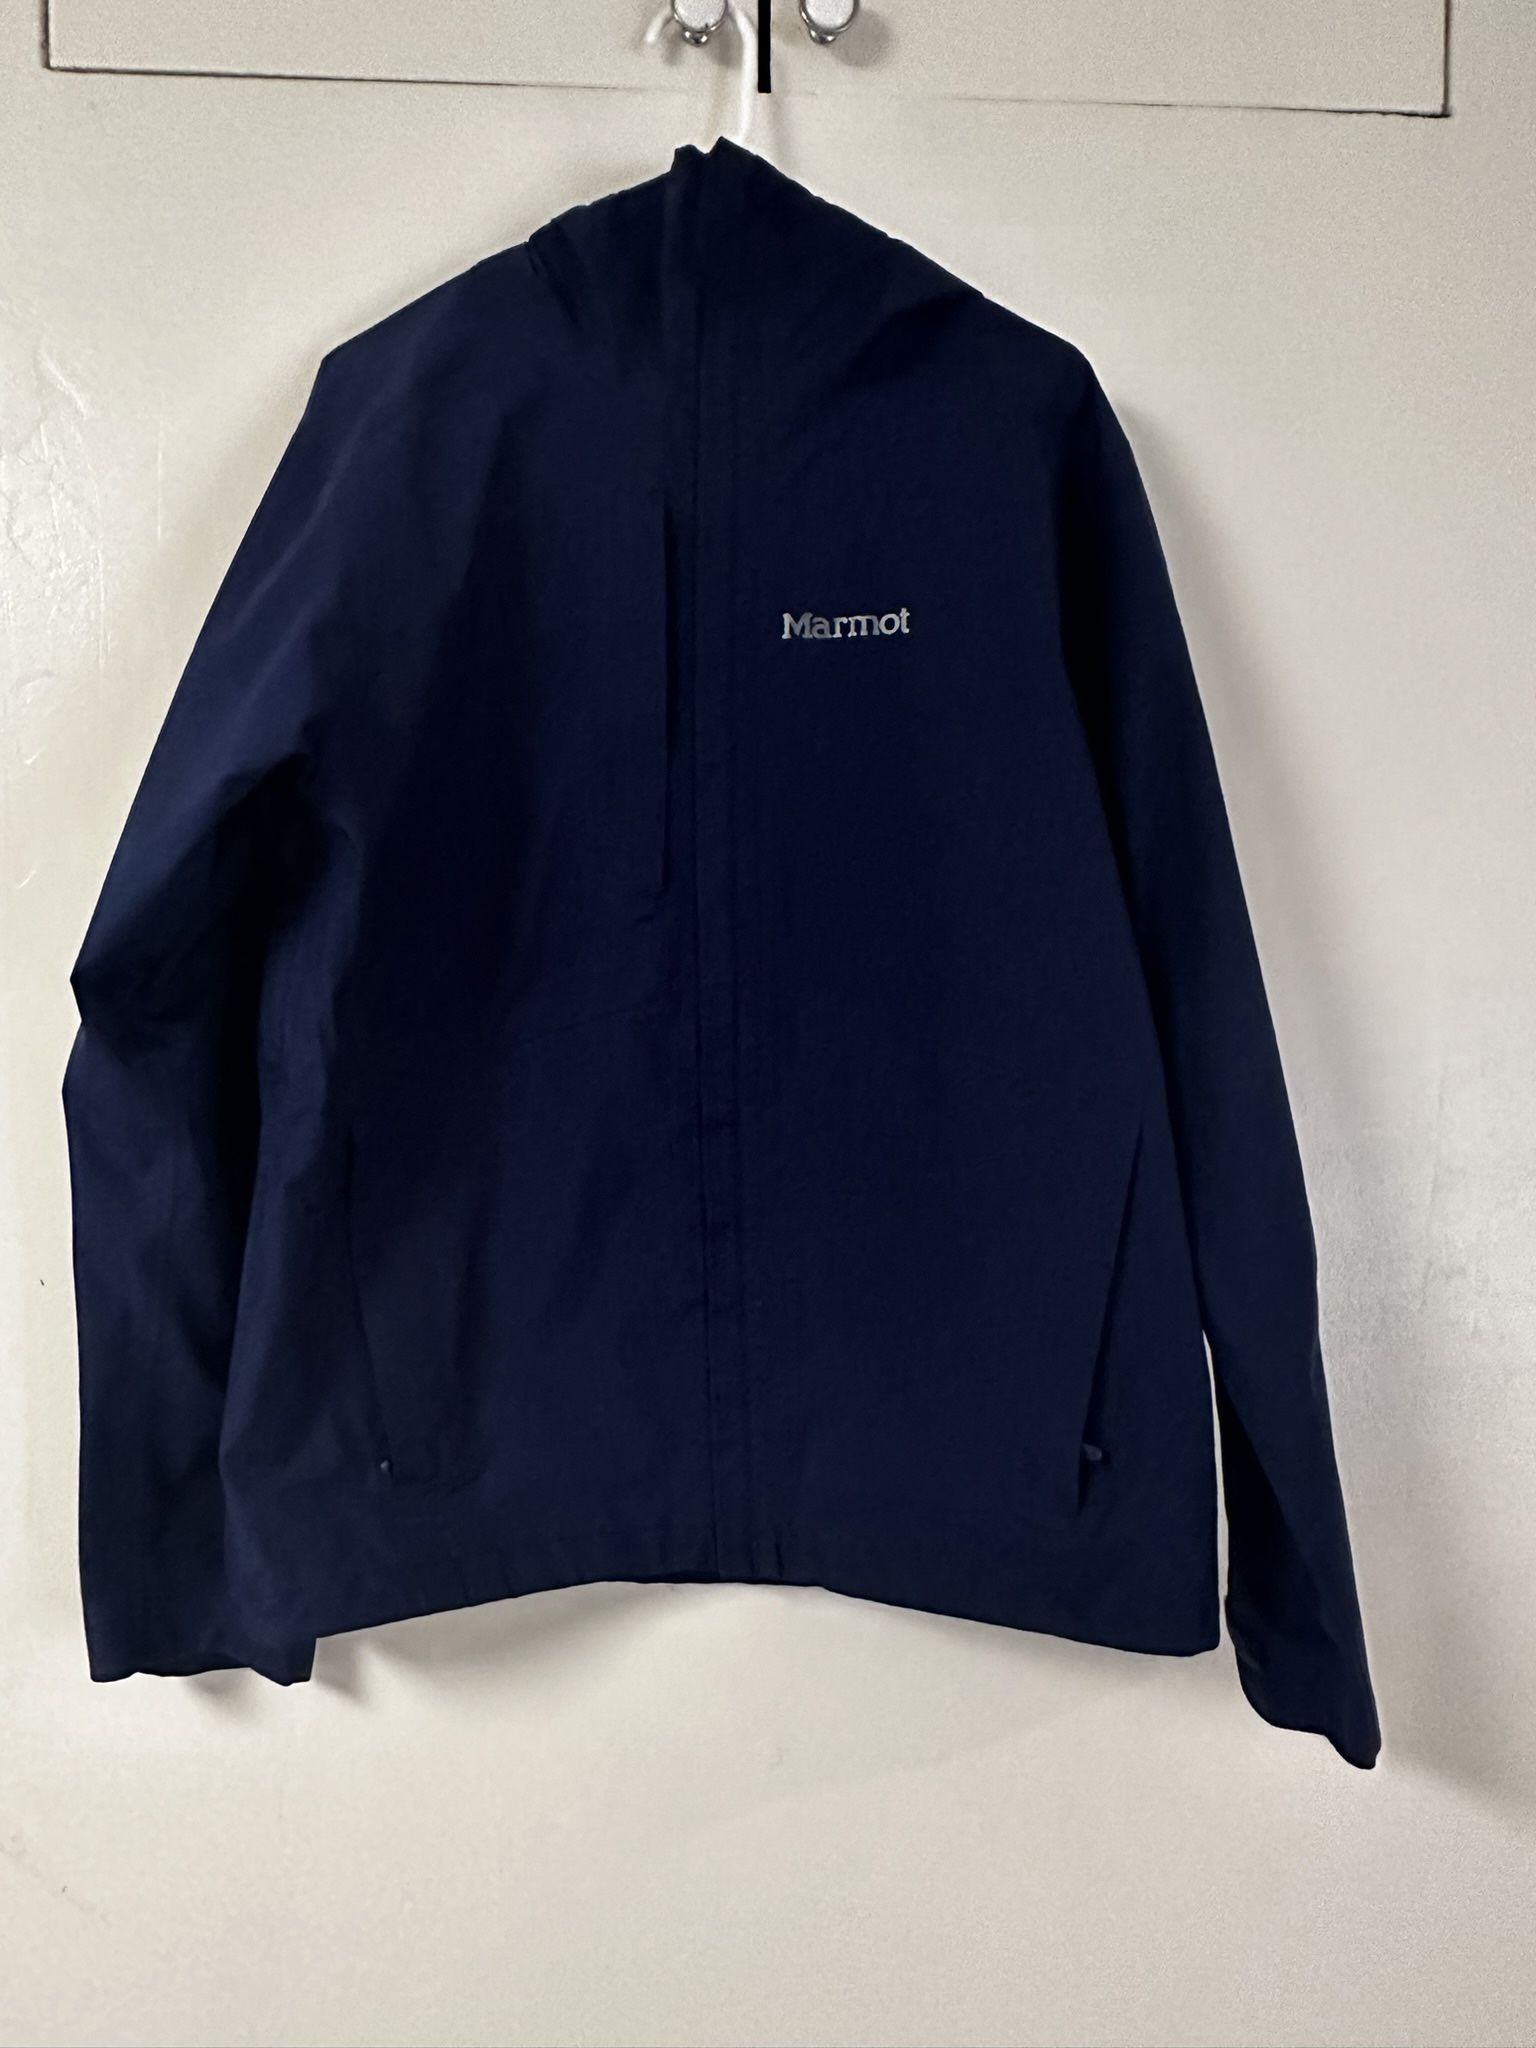 marmot minimalist jacket men size medium